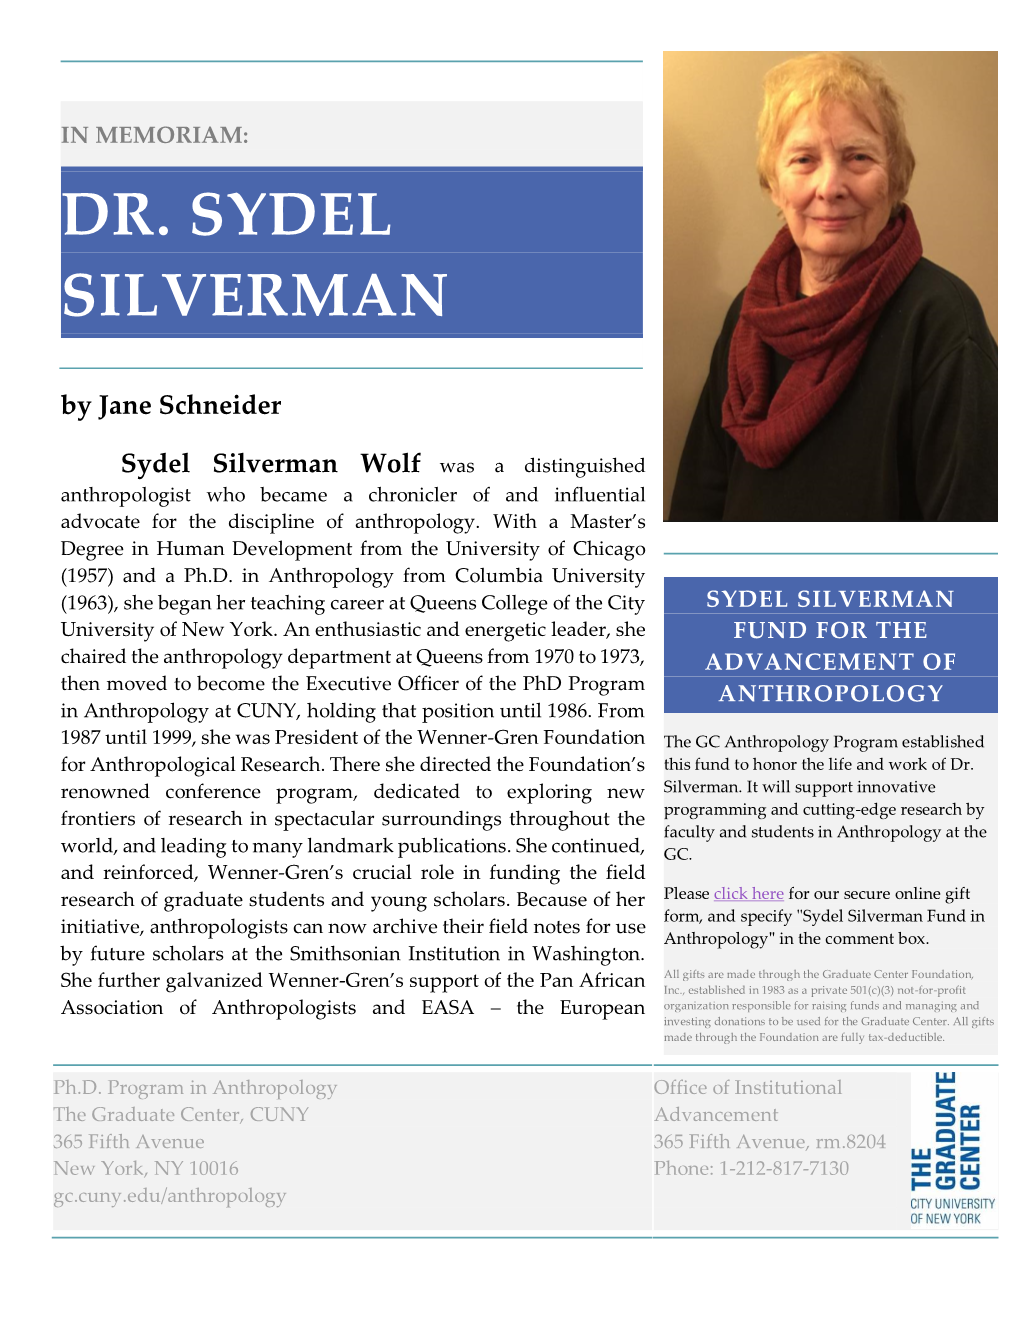 Dr. Sydel Silverman